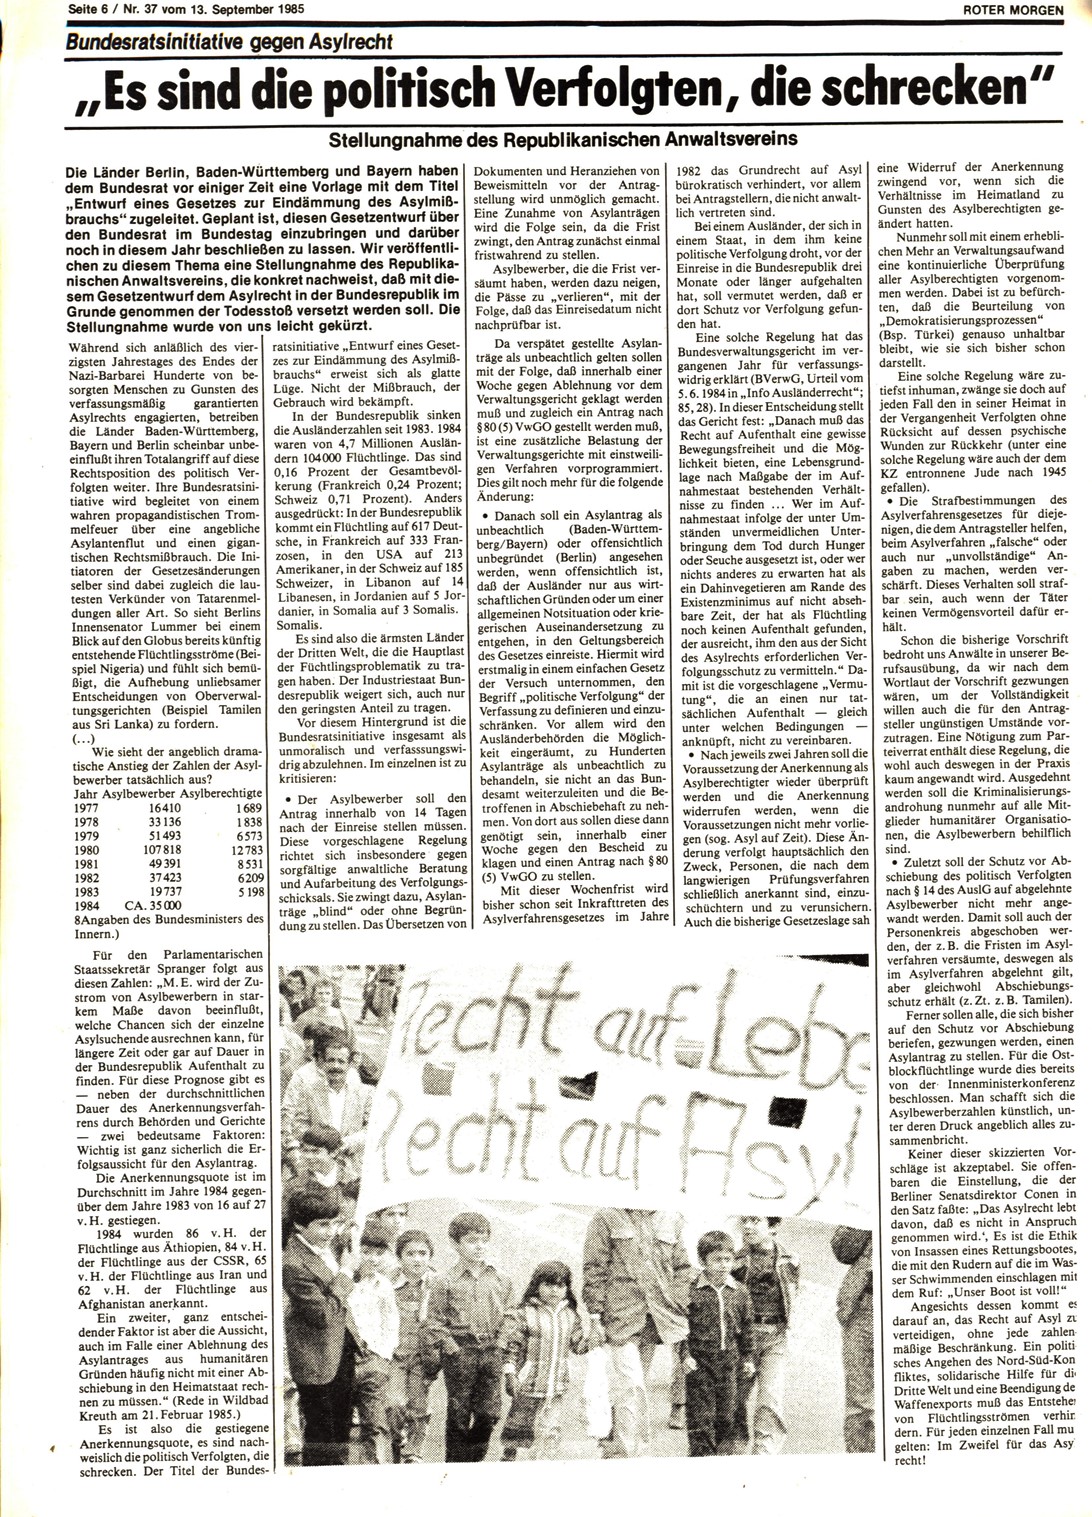 Roter Morgen, 19. Jg., 13. September 1985, Nr. 37, Seite 6